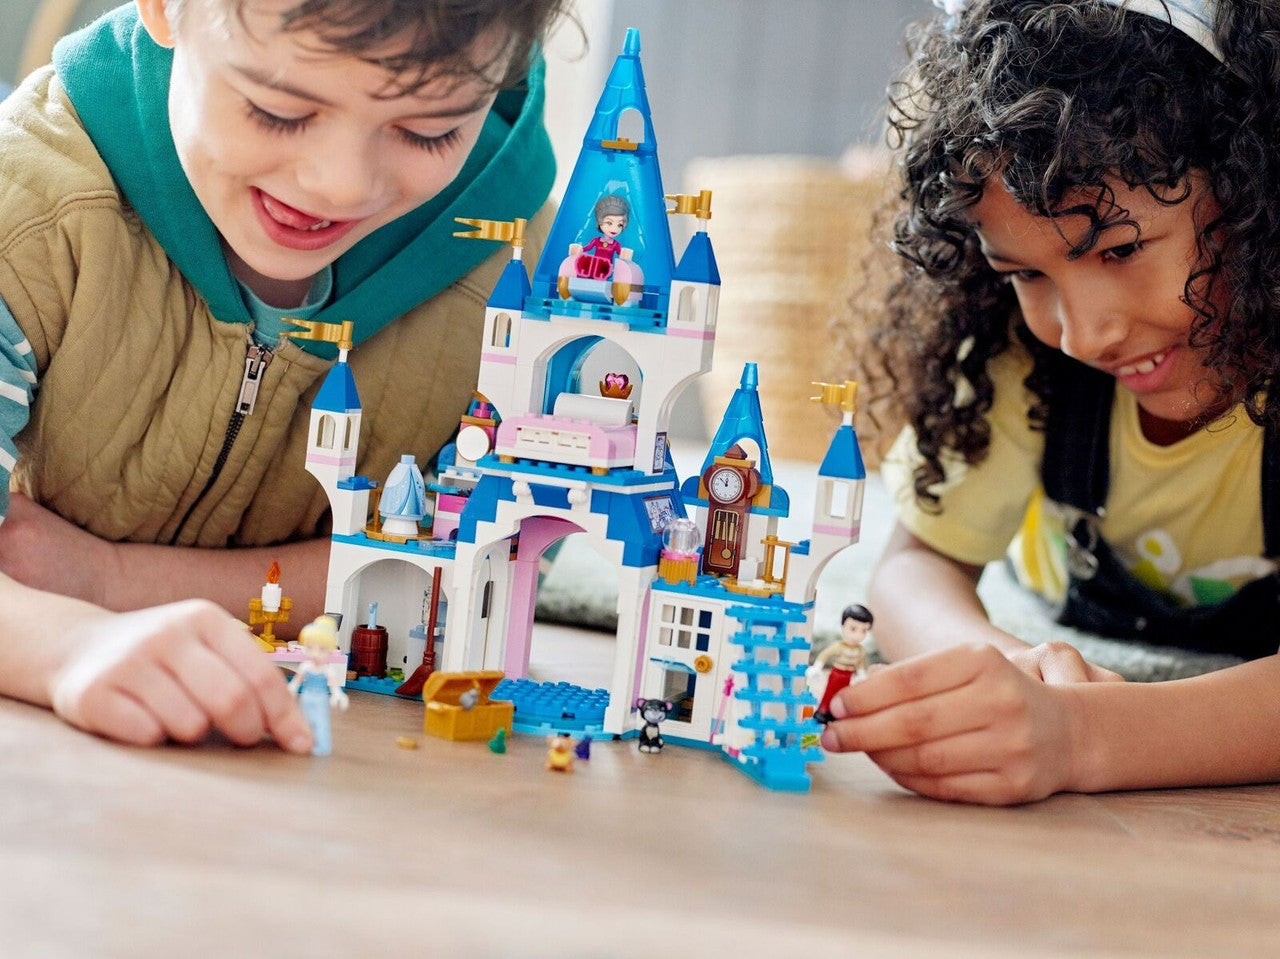 LEGO Disney Cinderella and Prince Charming's Castle 43206